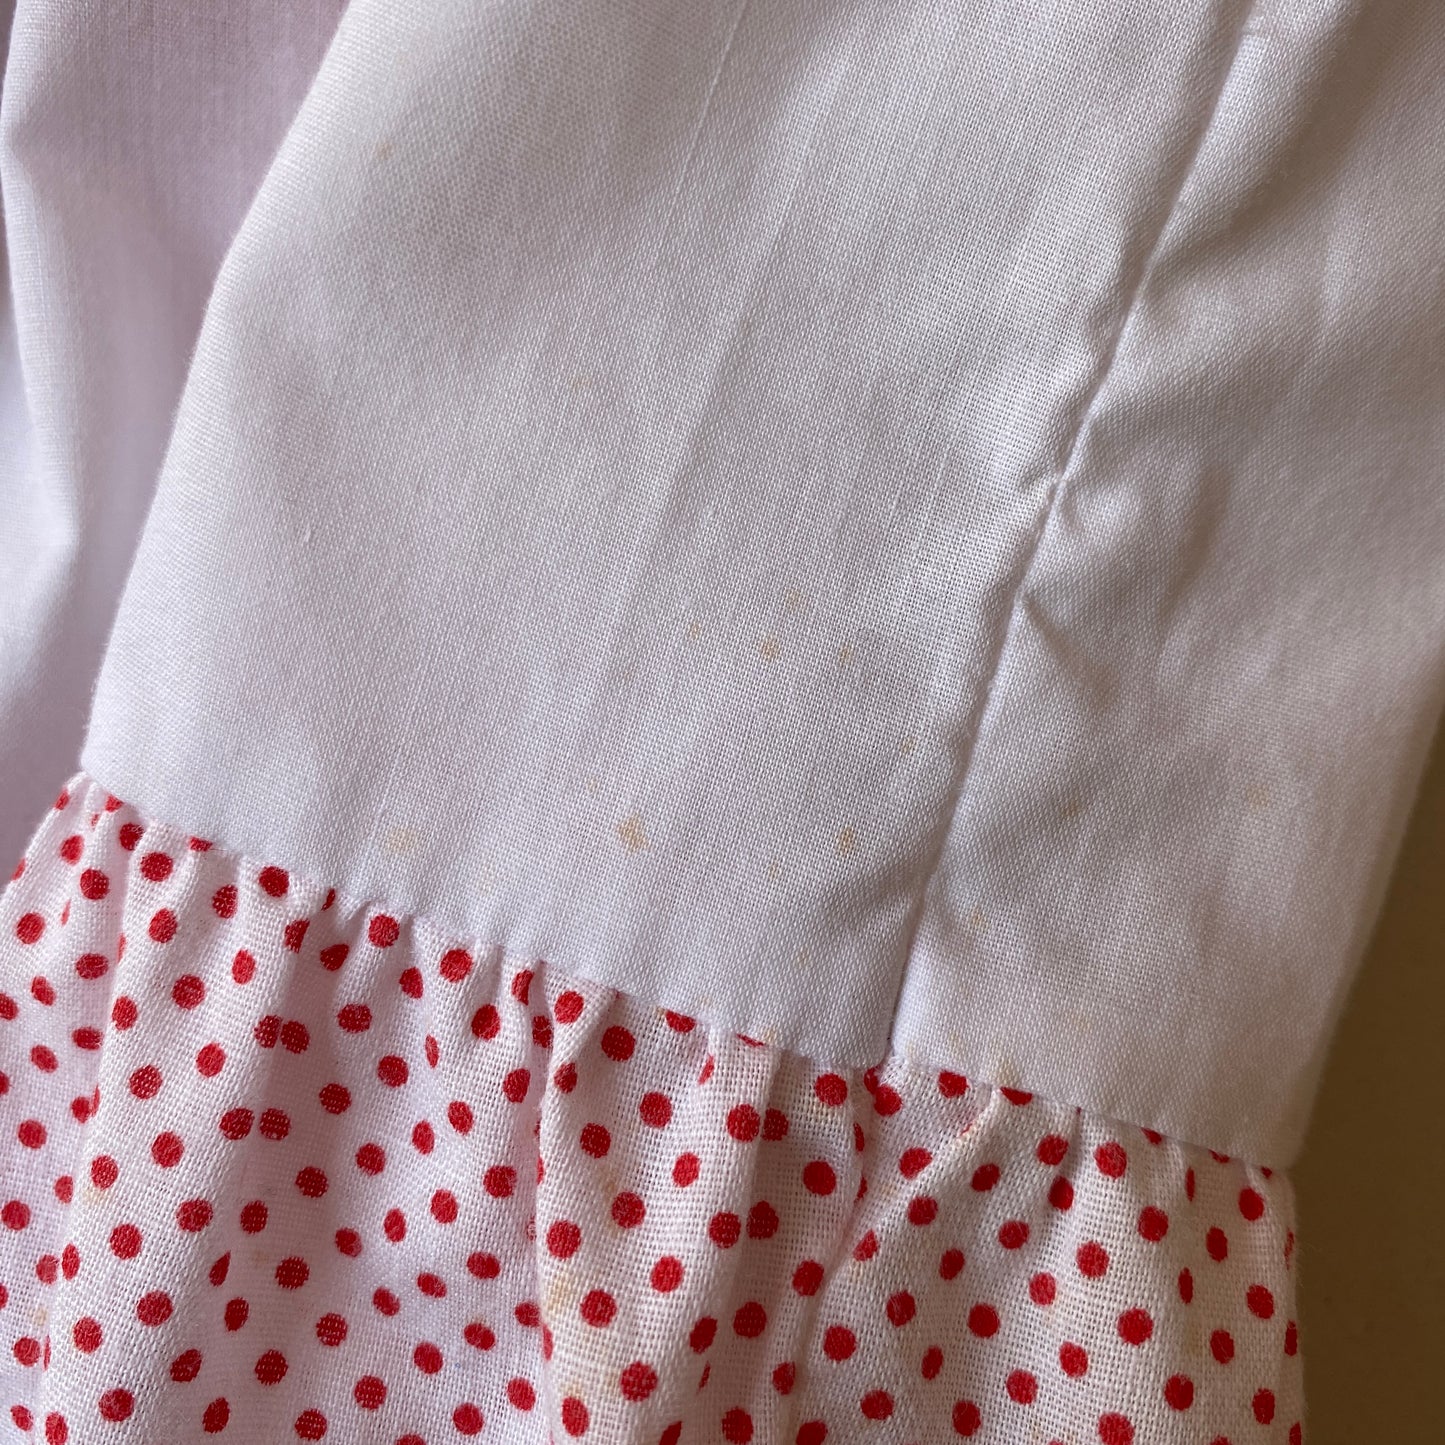 Vintage Strawberry Shortcake Collared Polka Dress (12M)